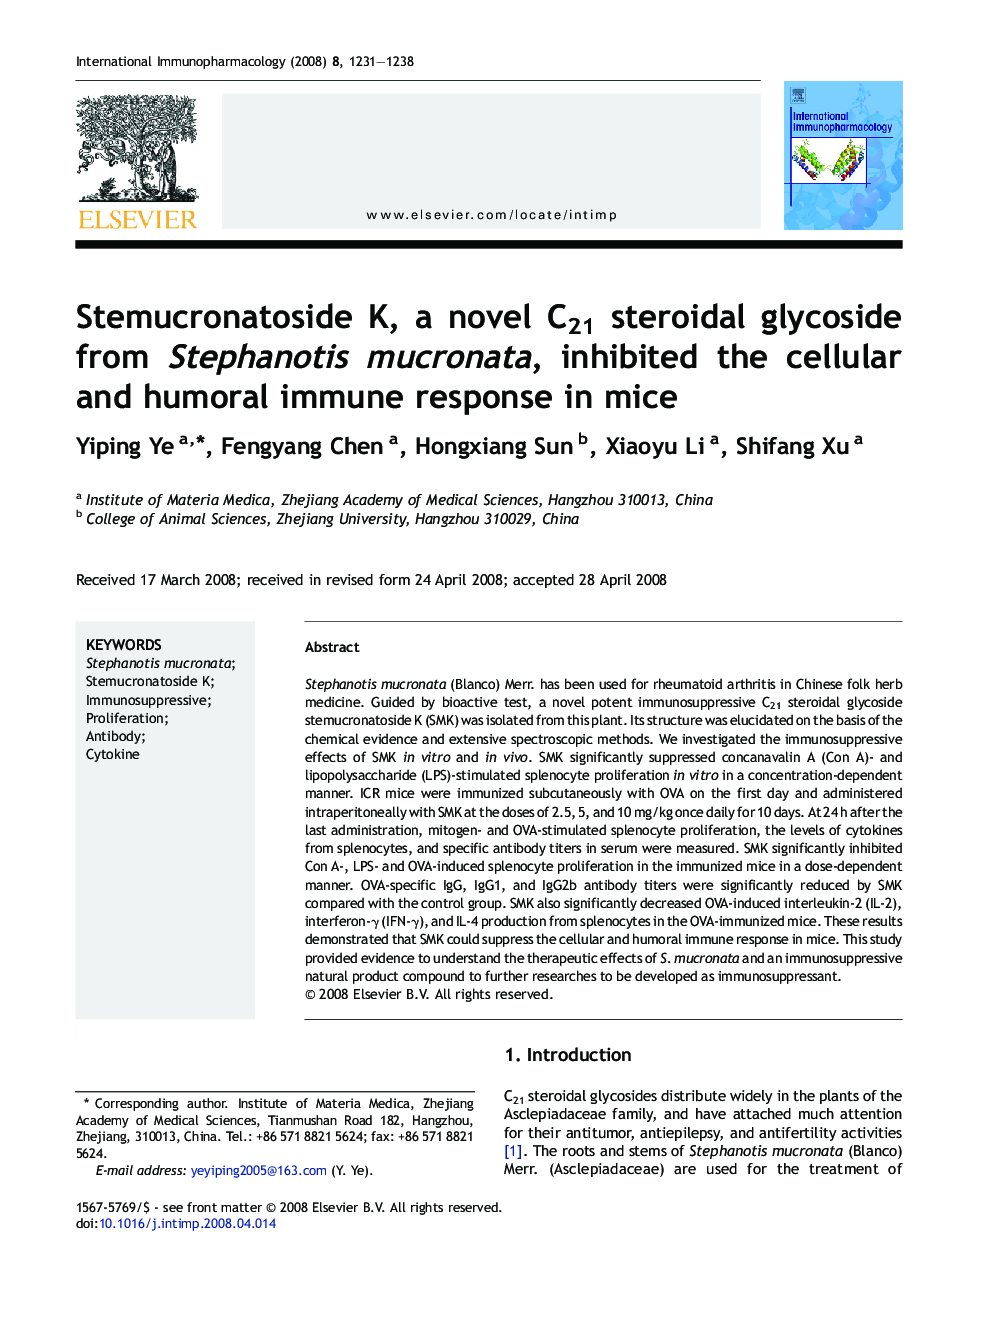 Stemucronatoside K, a novel C21 steroidal glycoside from Stephanotis mucronata, inhibited the cellular and humoral immune response in mice